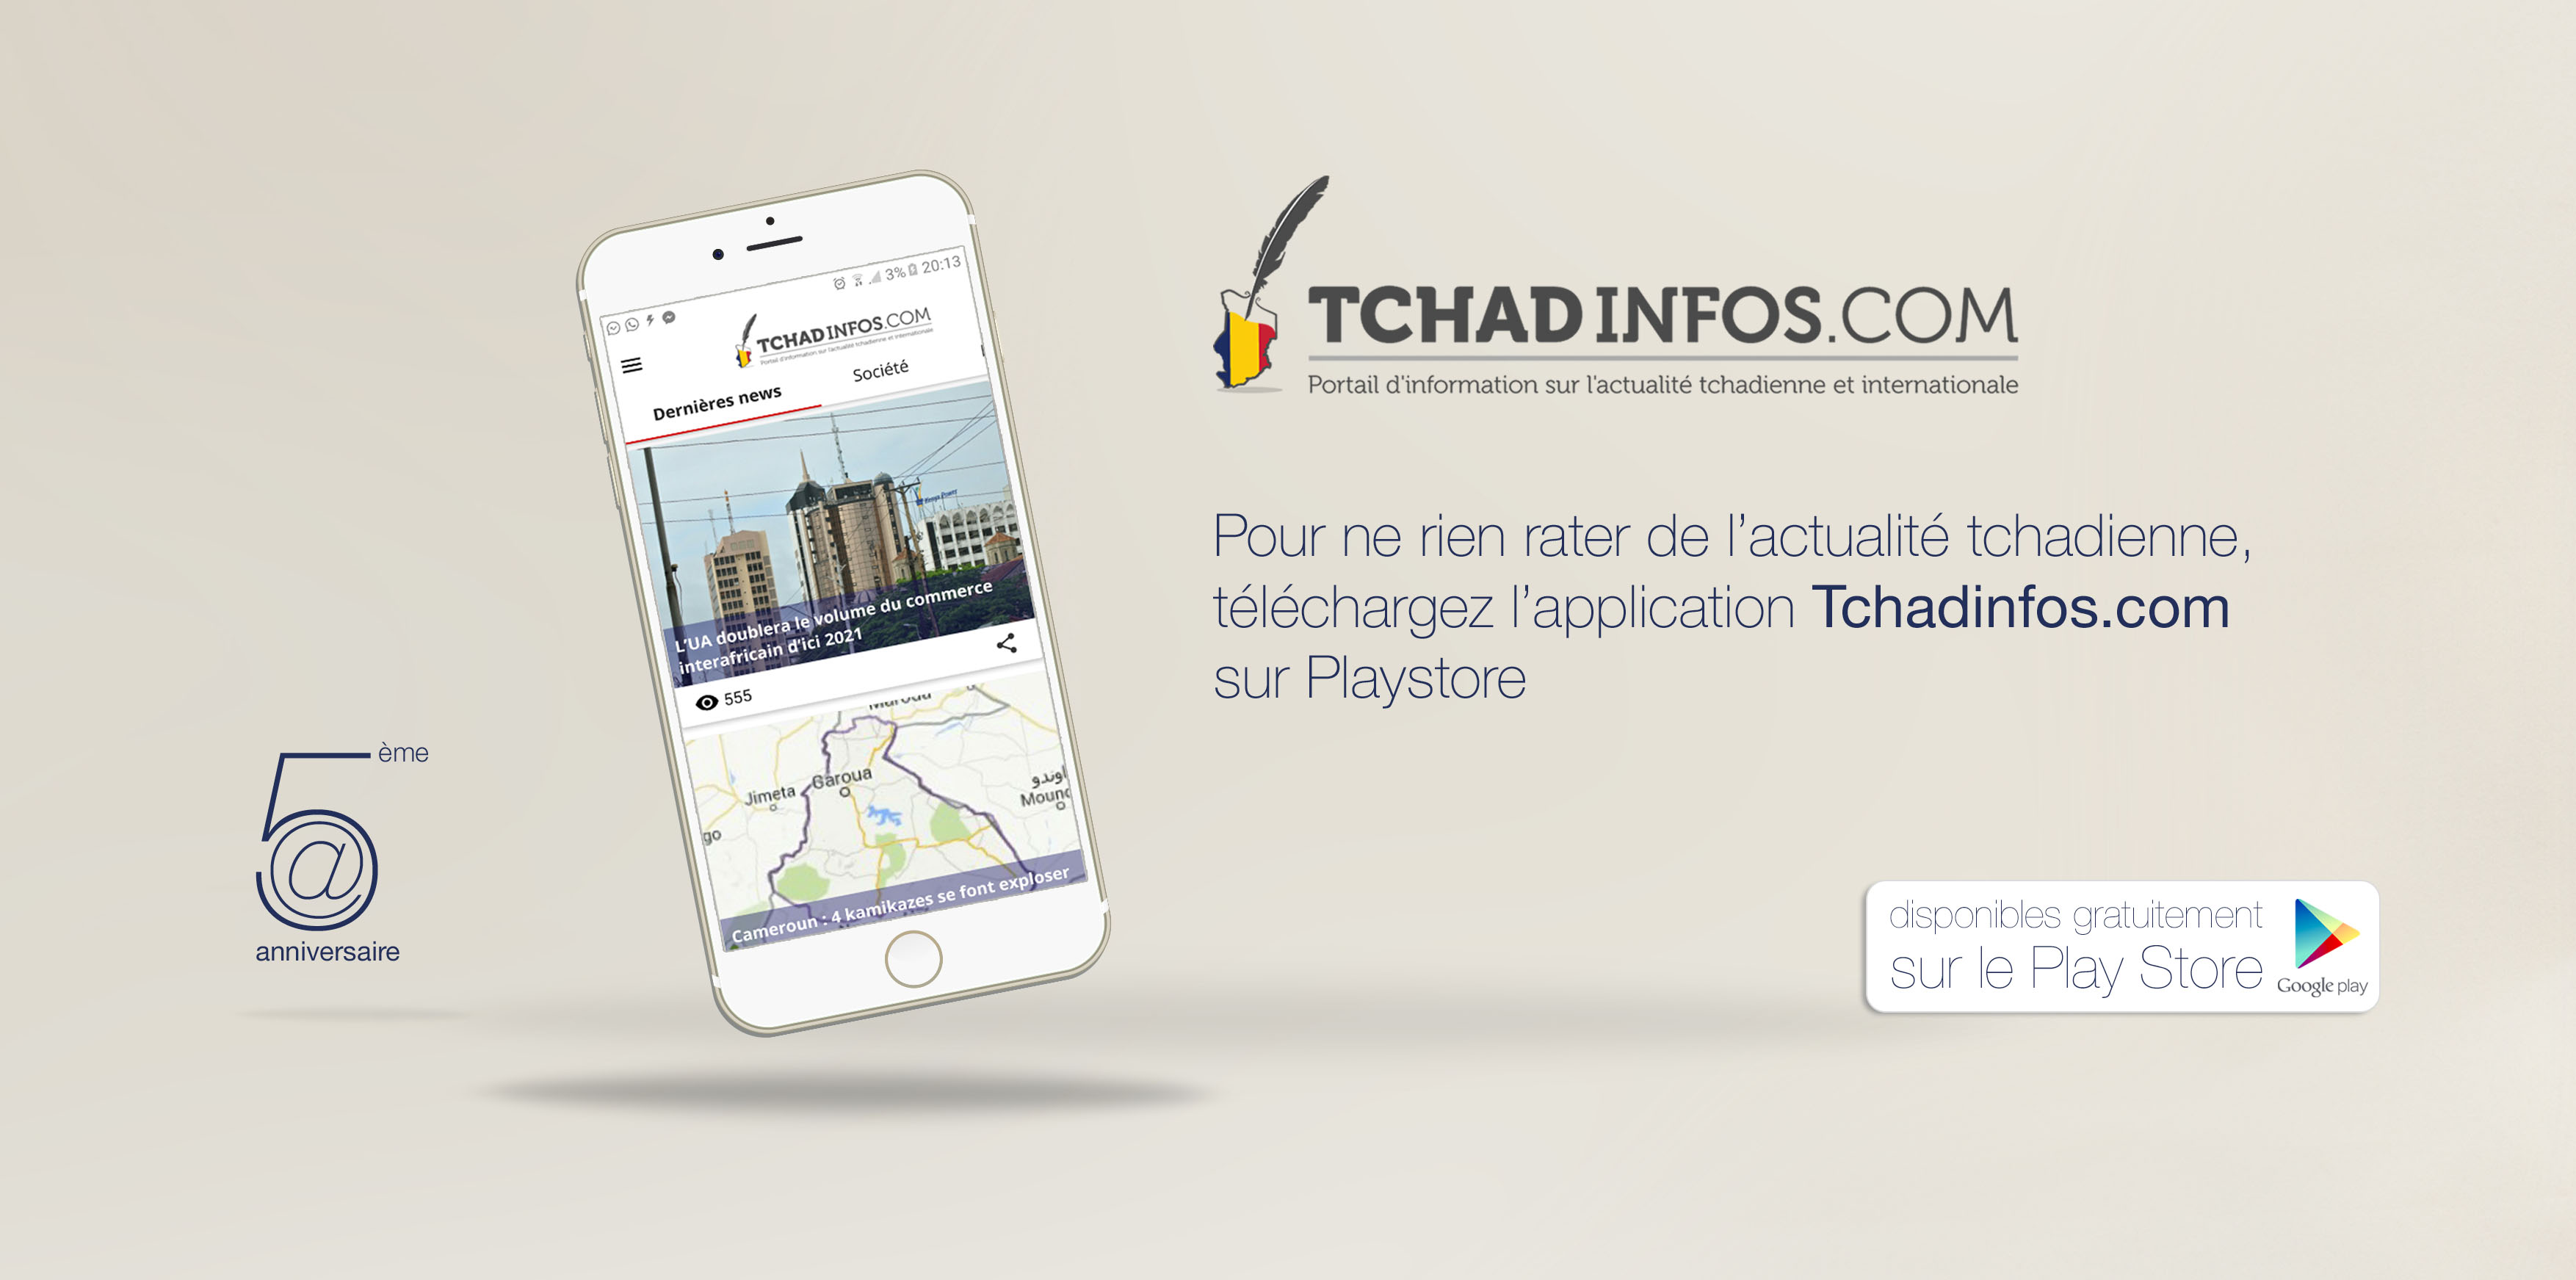 Tchadinfos.com lance son application